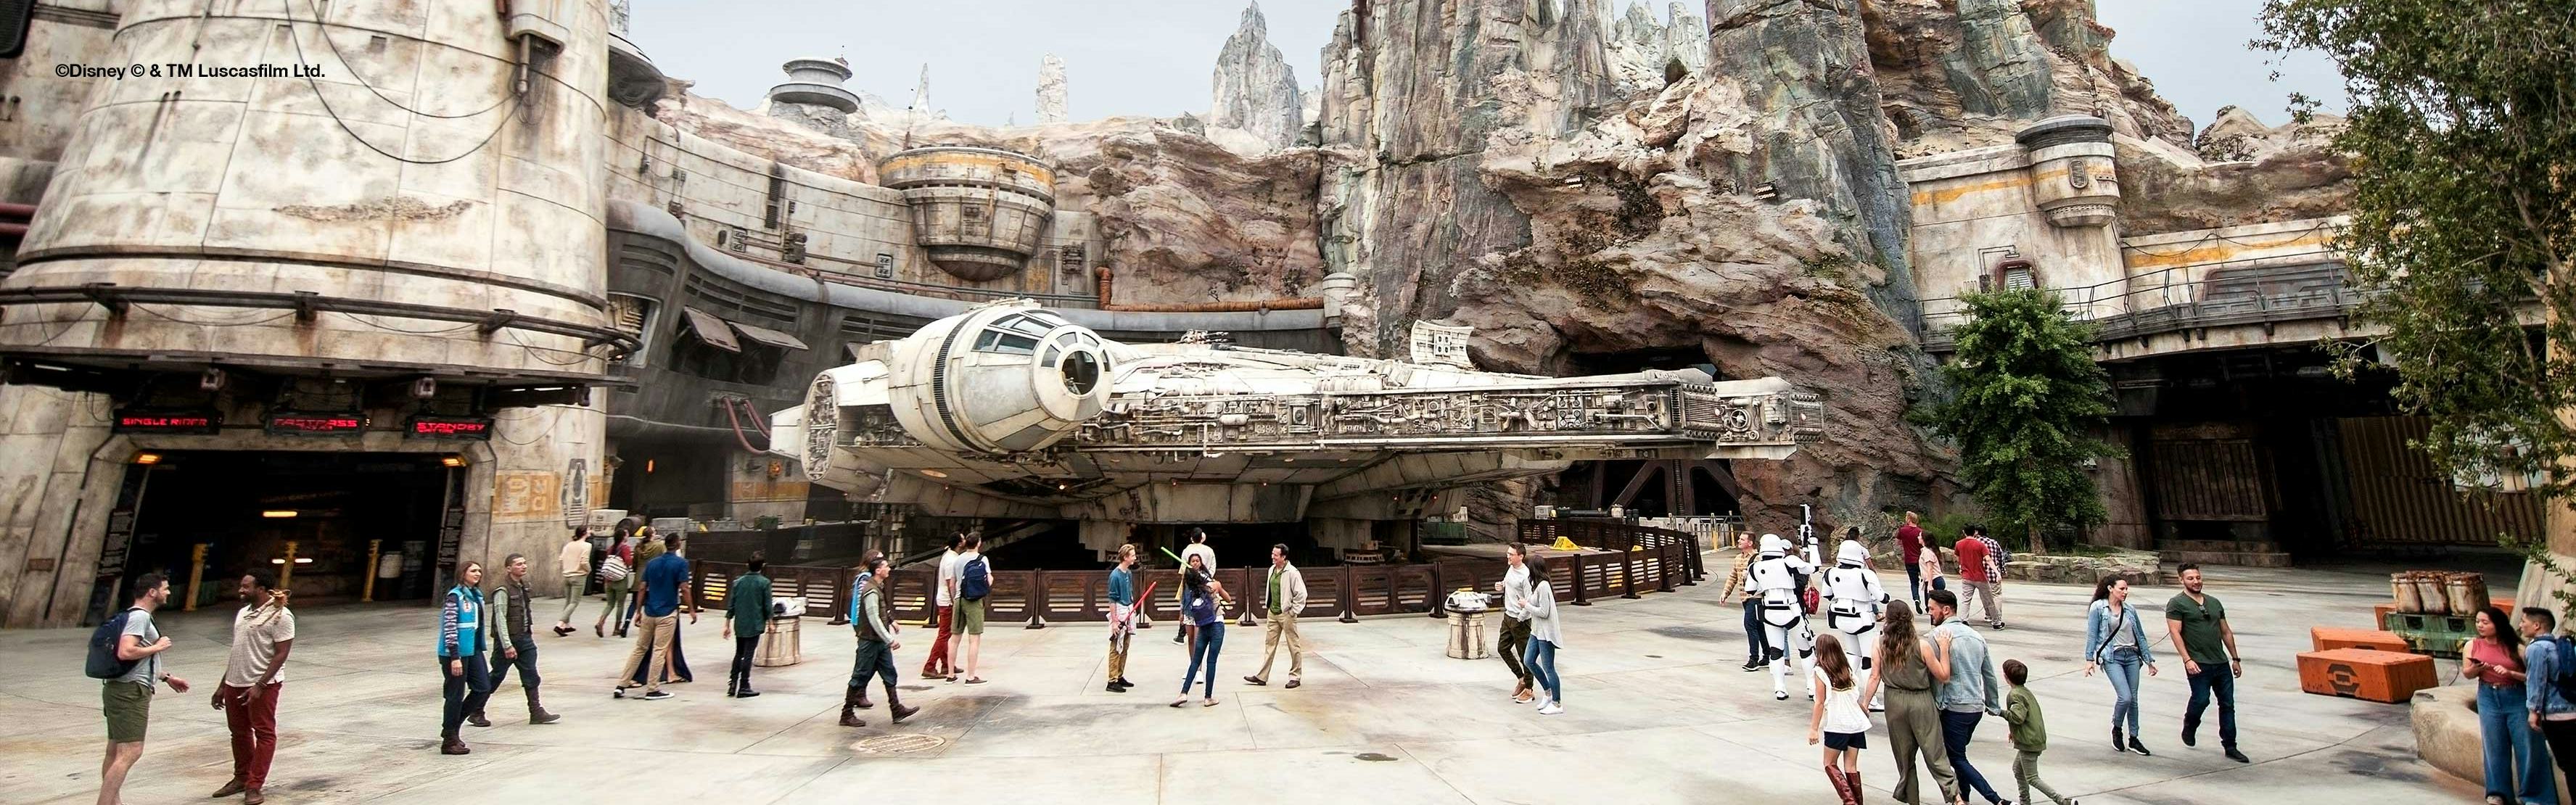 Families and kids at Walt Disney World Resort's newest attraction - Star Wars: Galaxy's Edge 